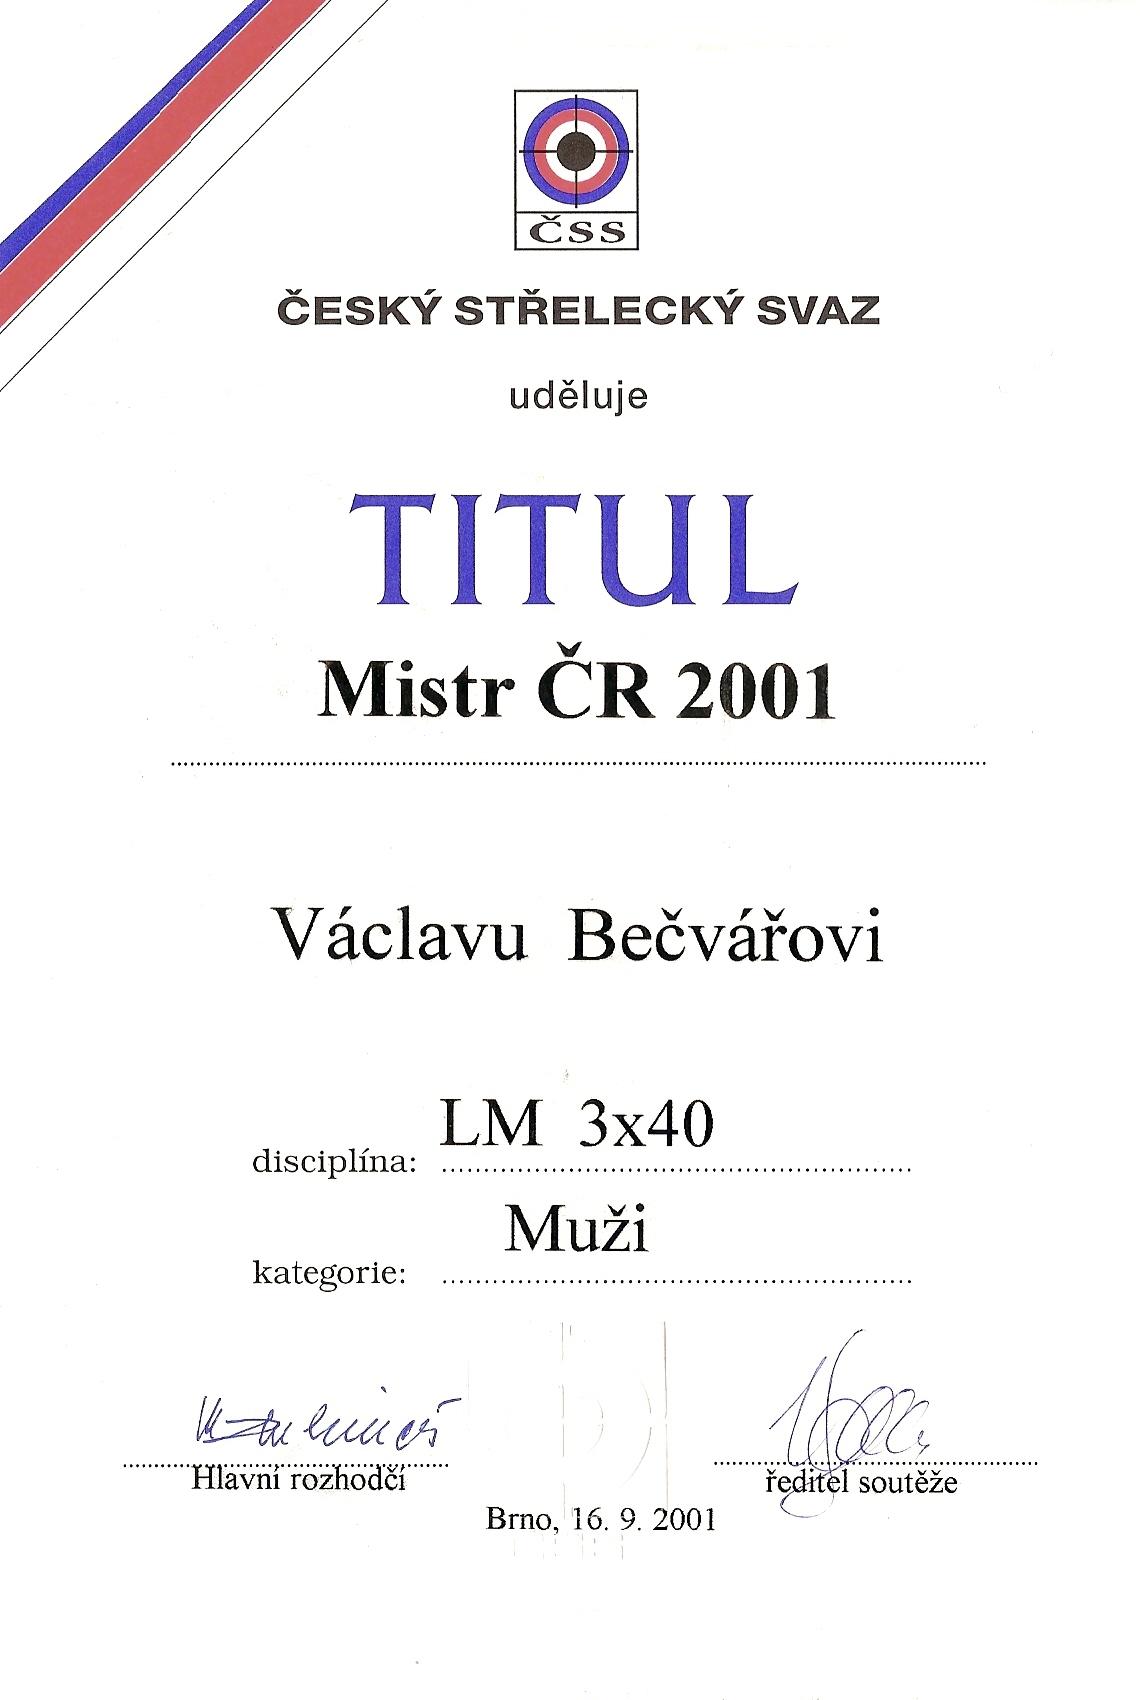 TITUL M-ČR 2001.jpg